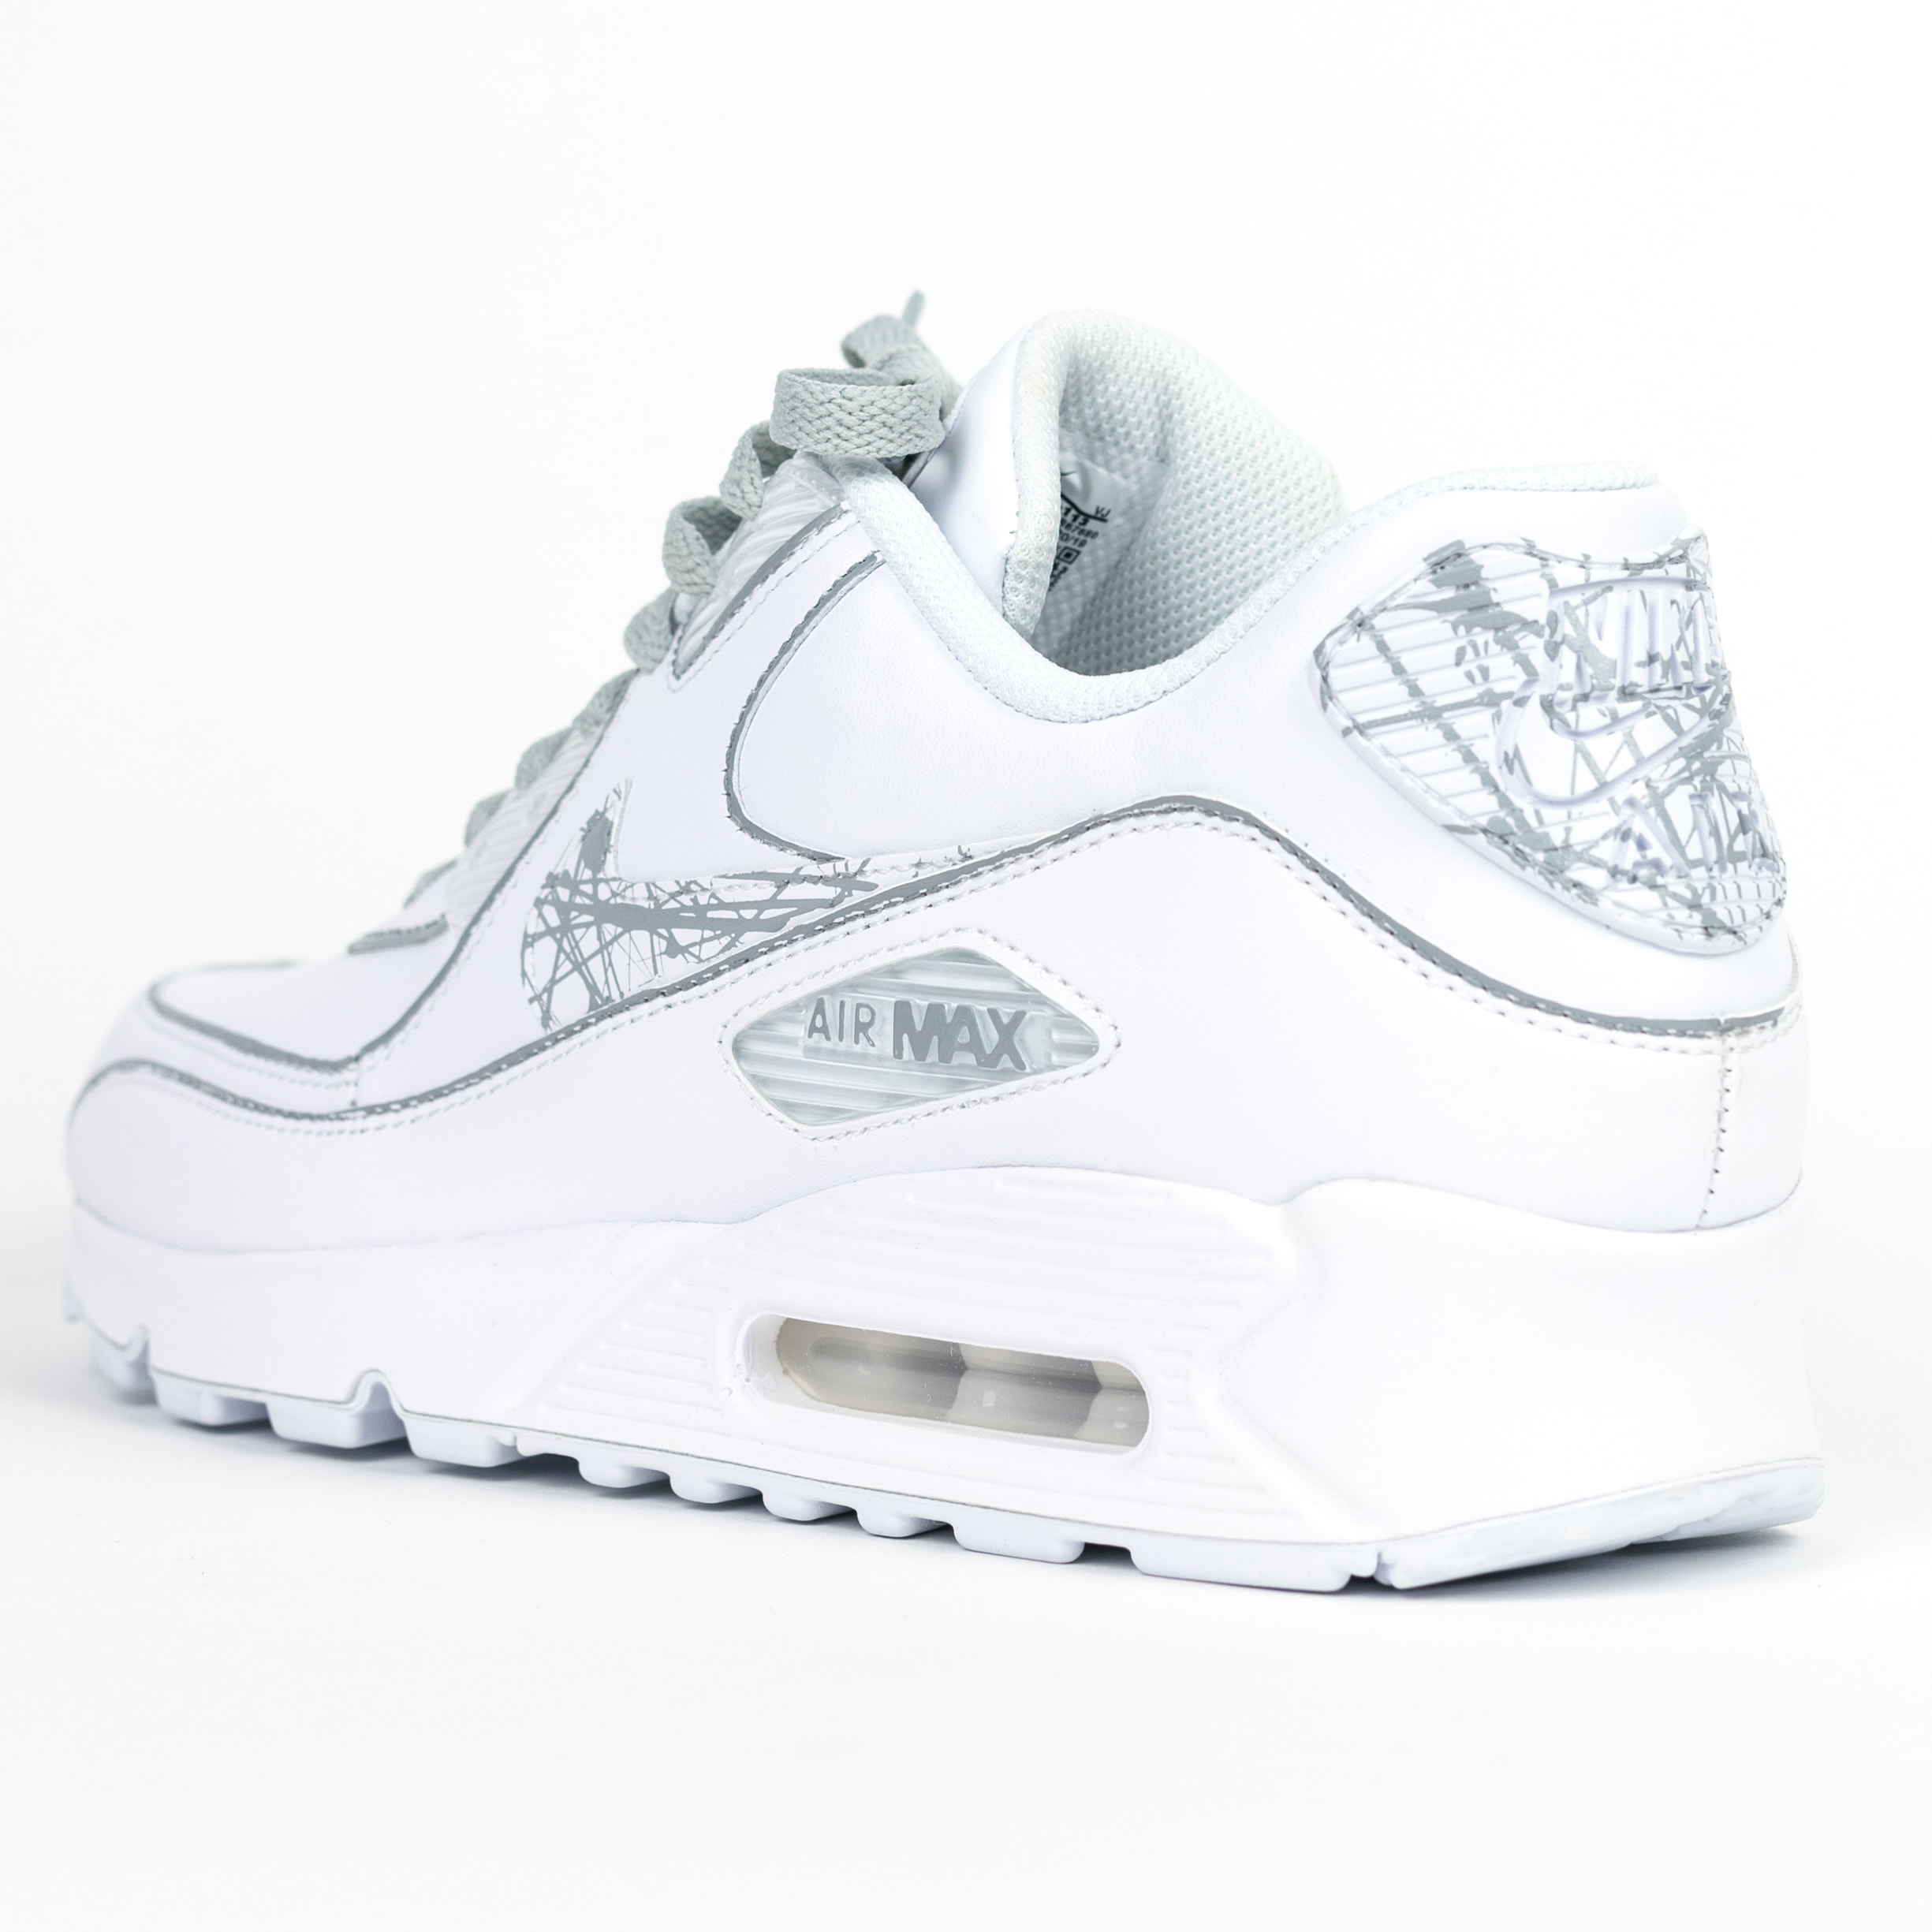 Dallas White Splat Custom Nike Air Max Shoes Grey - Bandana Fever